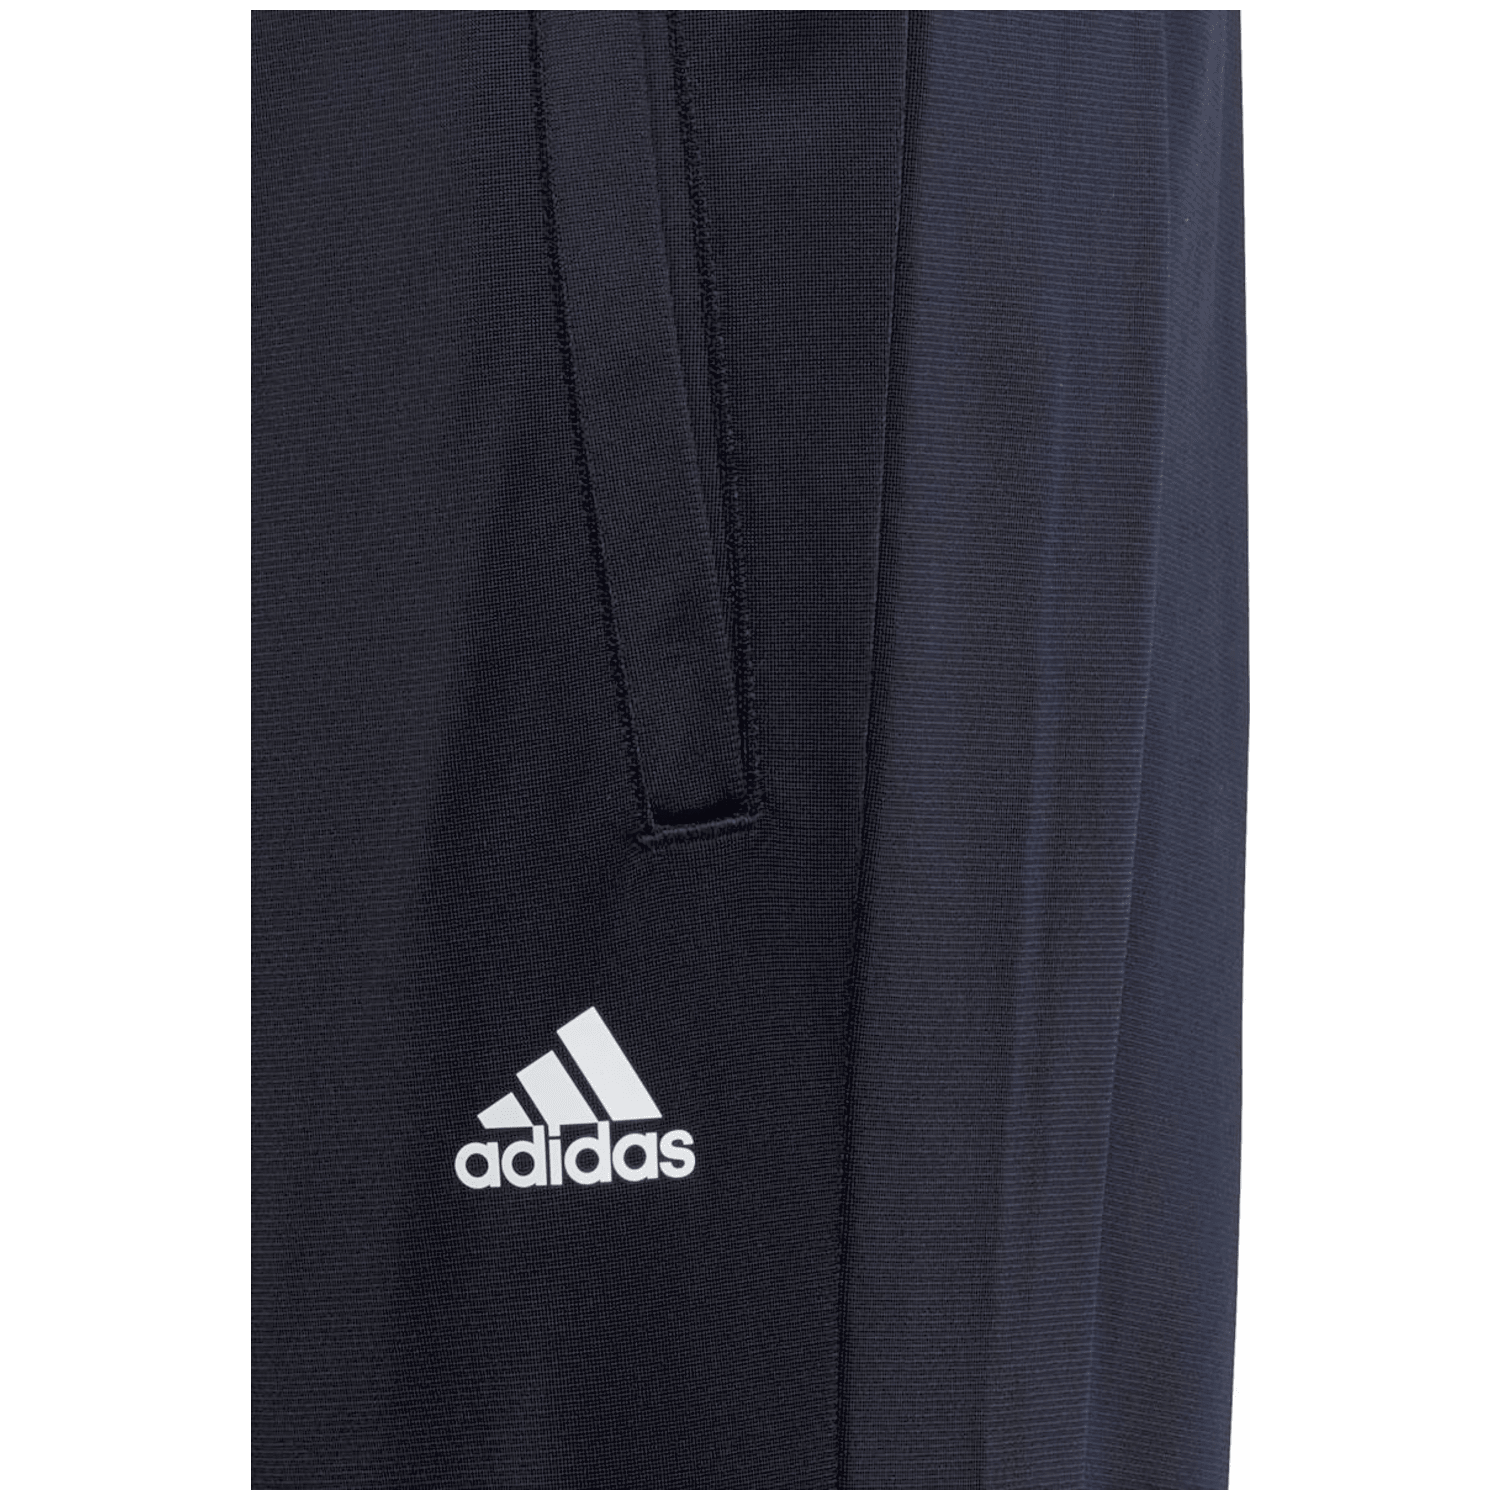 Adidas Essentials Big Logo Trainingsanzug Kinder